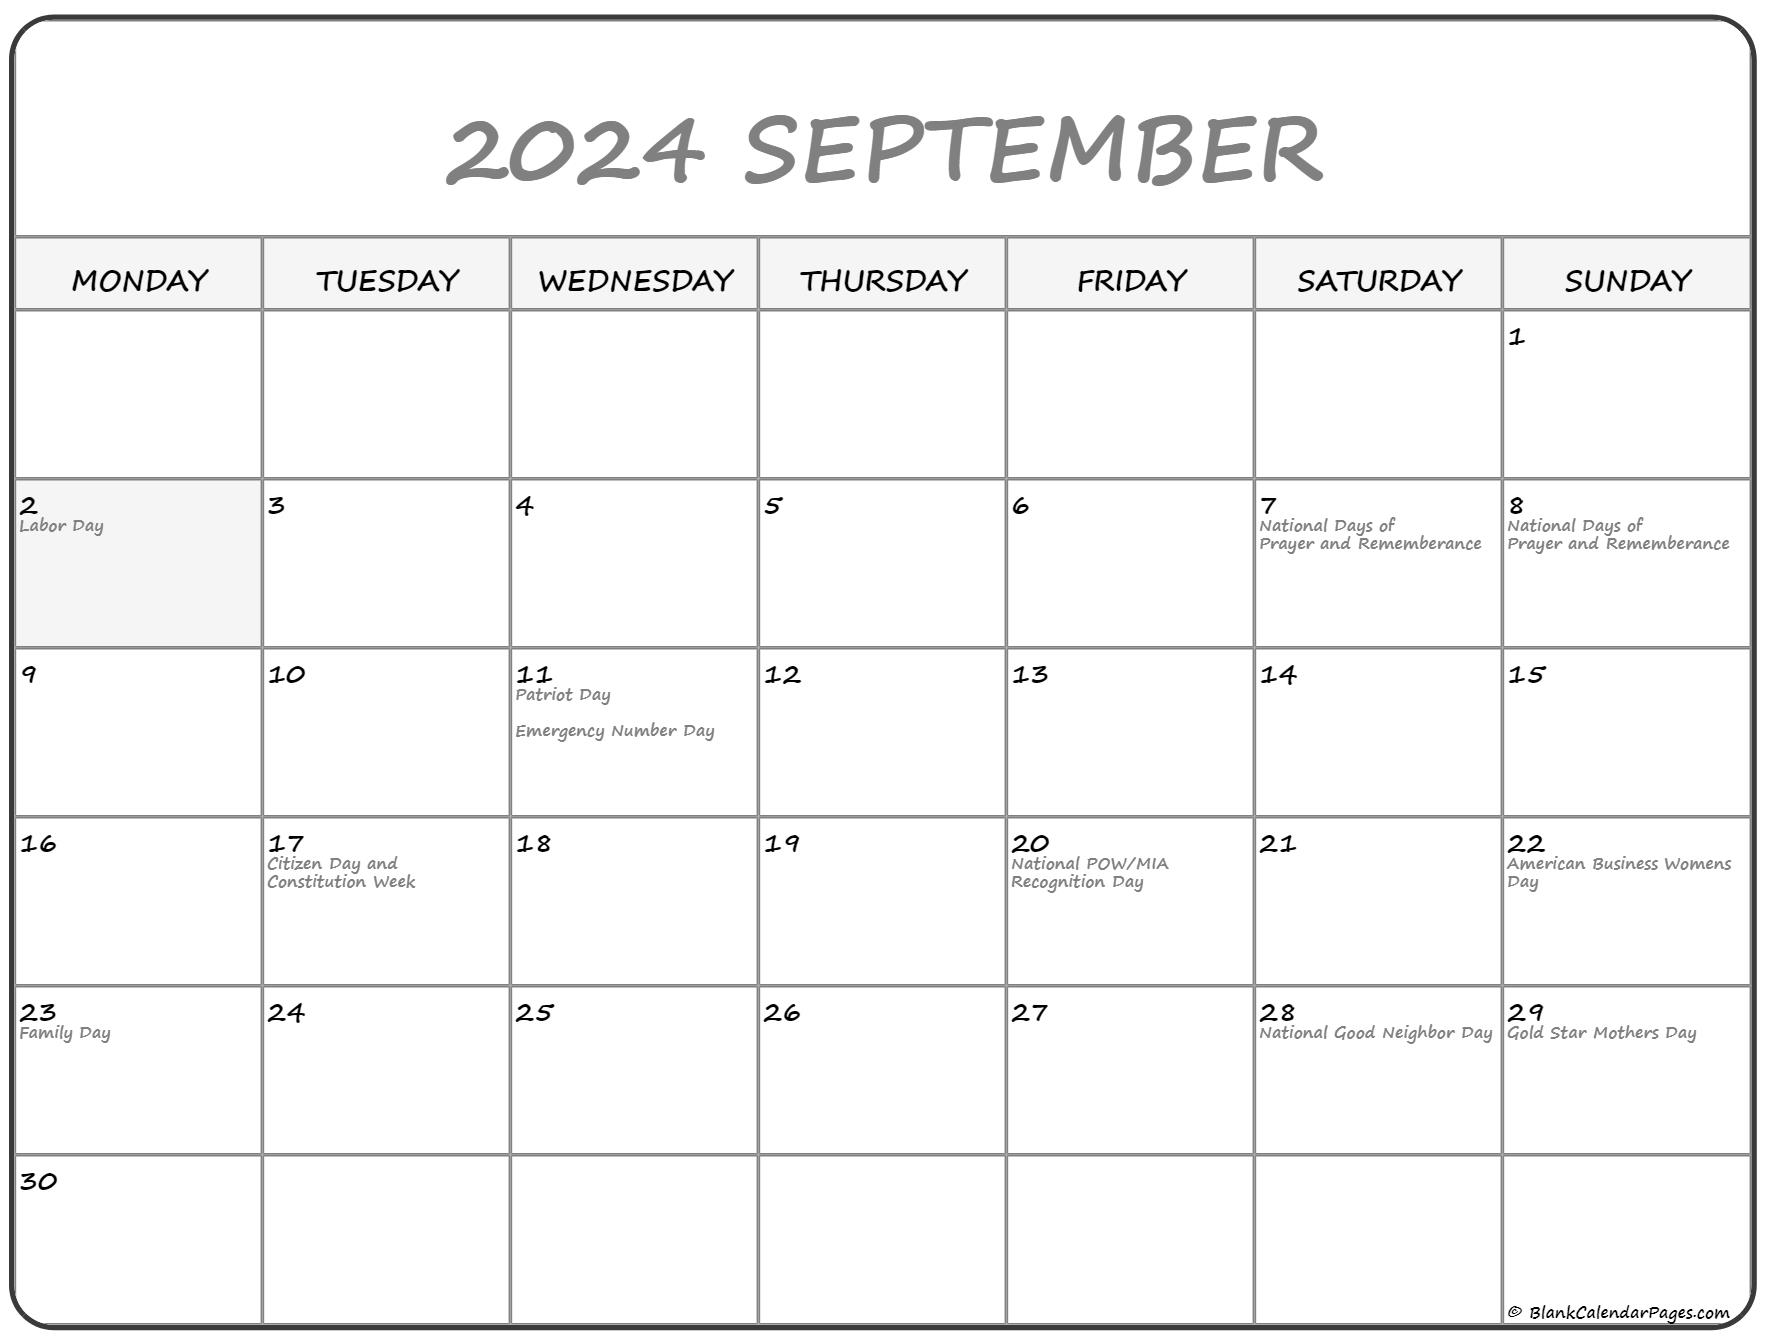 September 2021 Monday Calendar Monday to Sunday